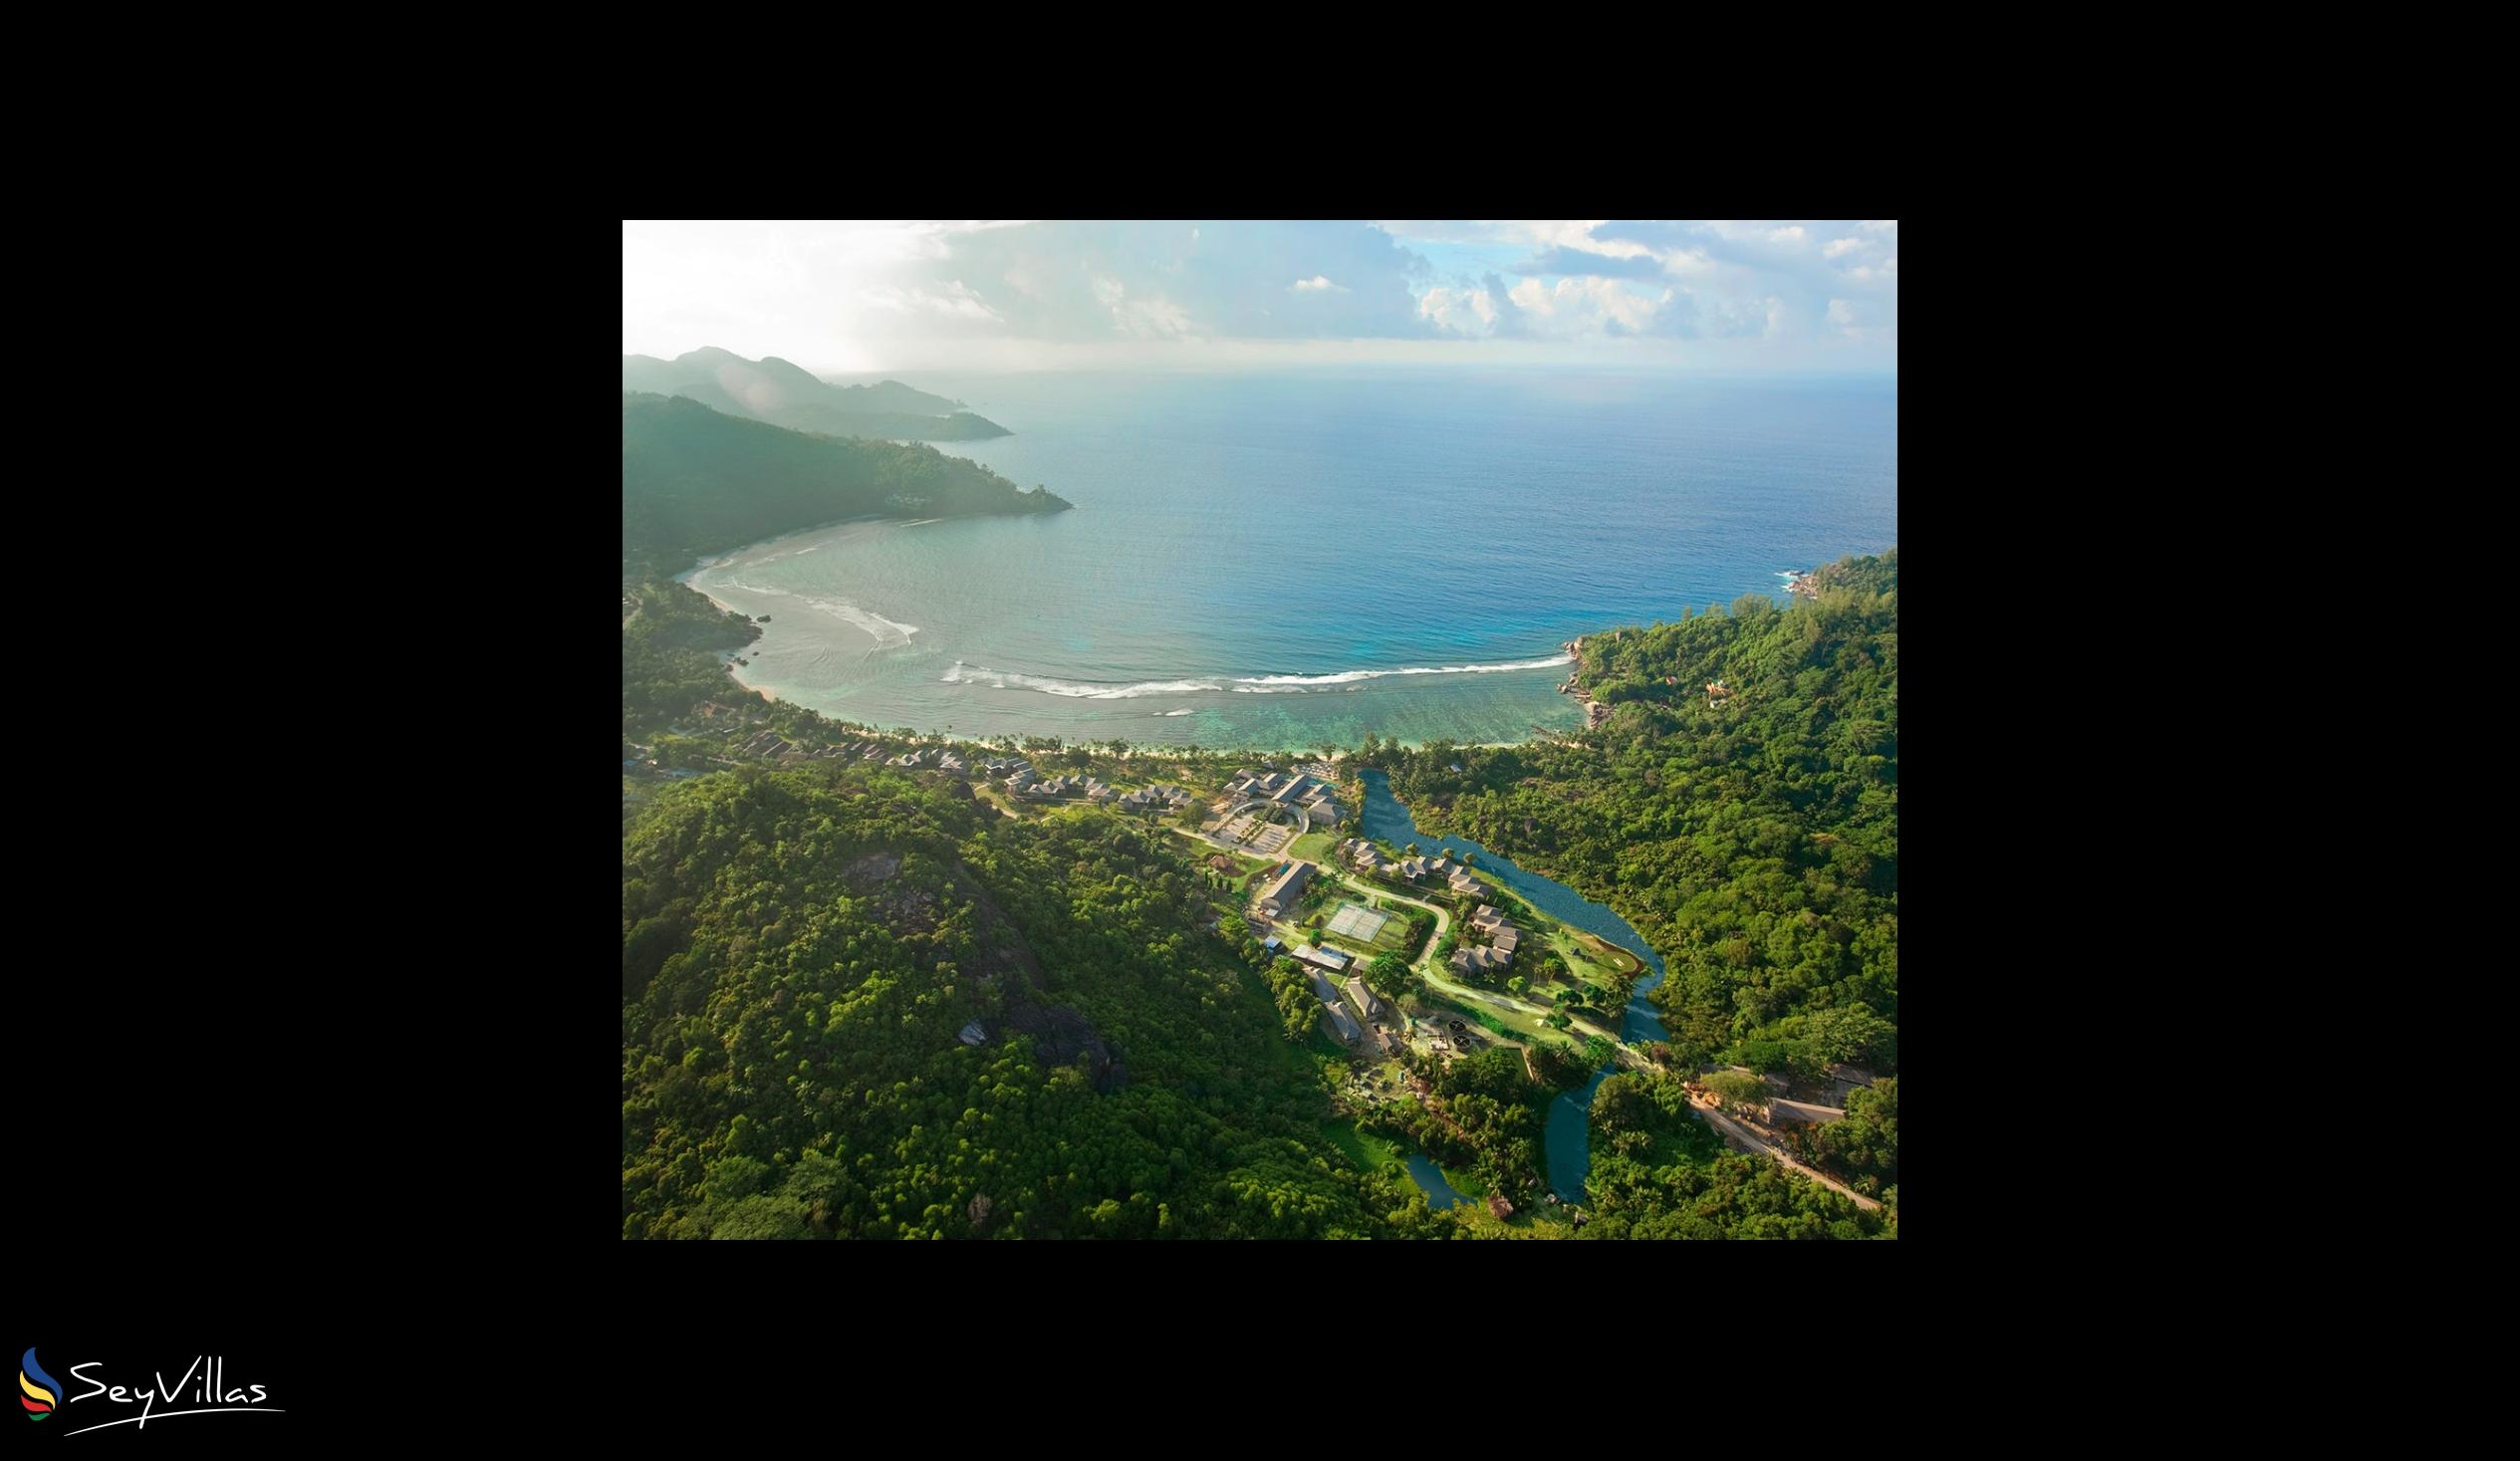 Photo 67: Kempinski Seychelles Resort Baie Lazare - Location - Mahé (Seychelles)